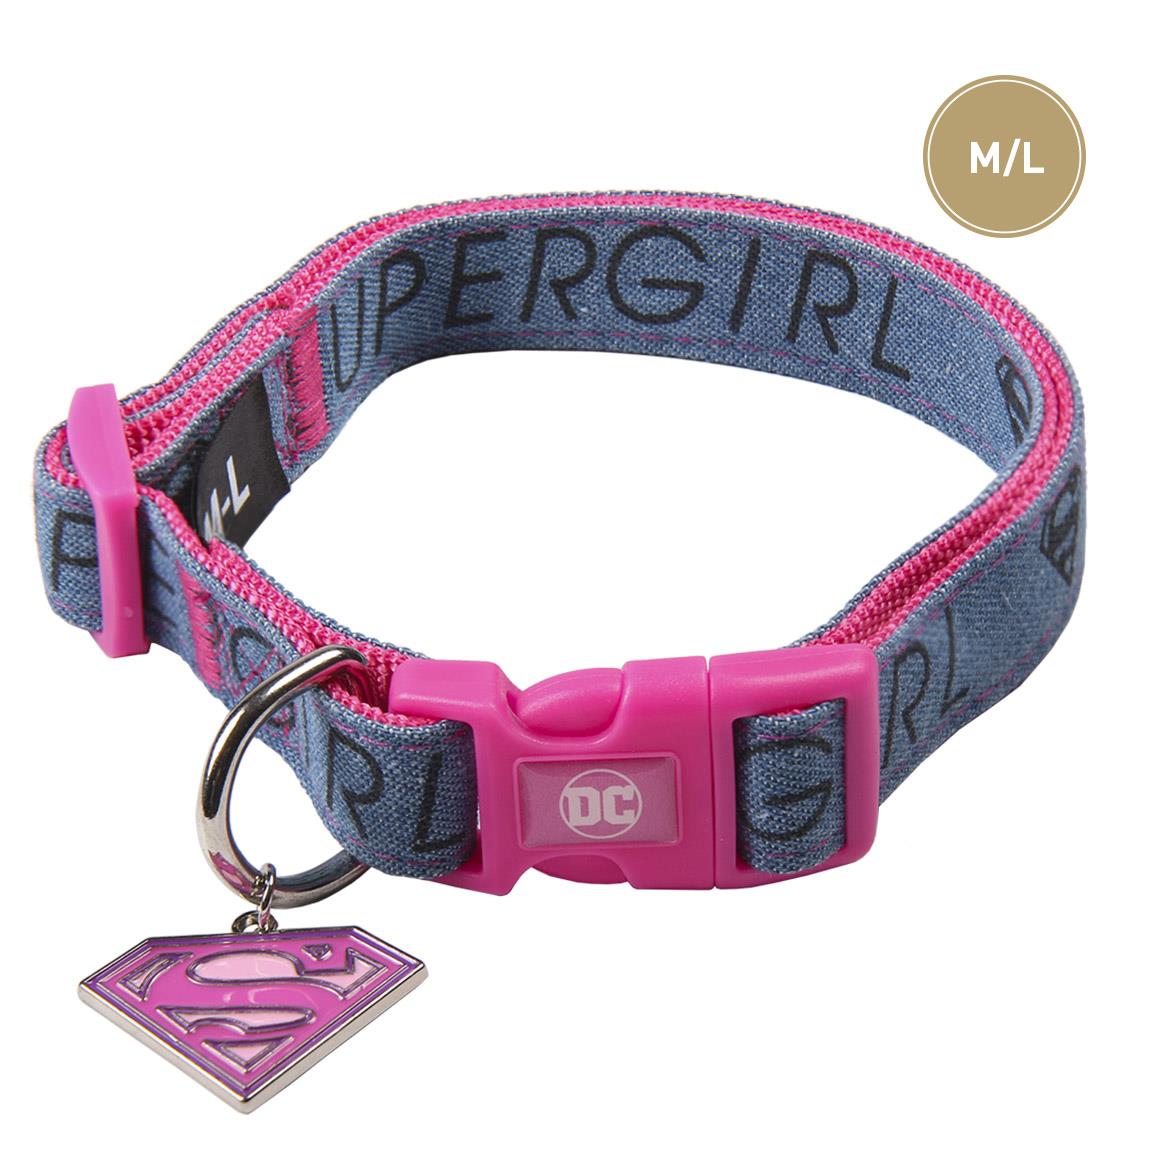 Superman Dog Collar M/L